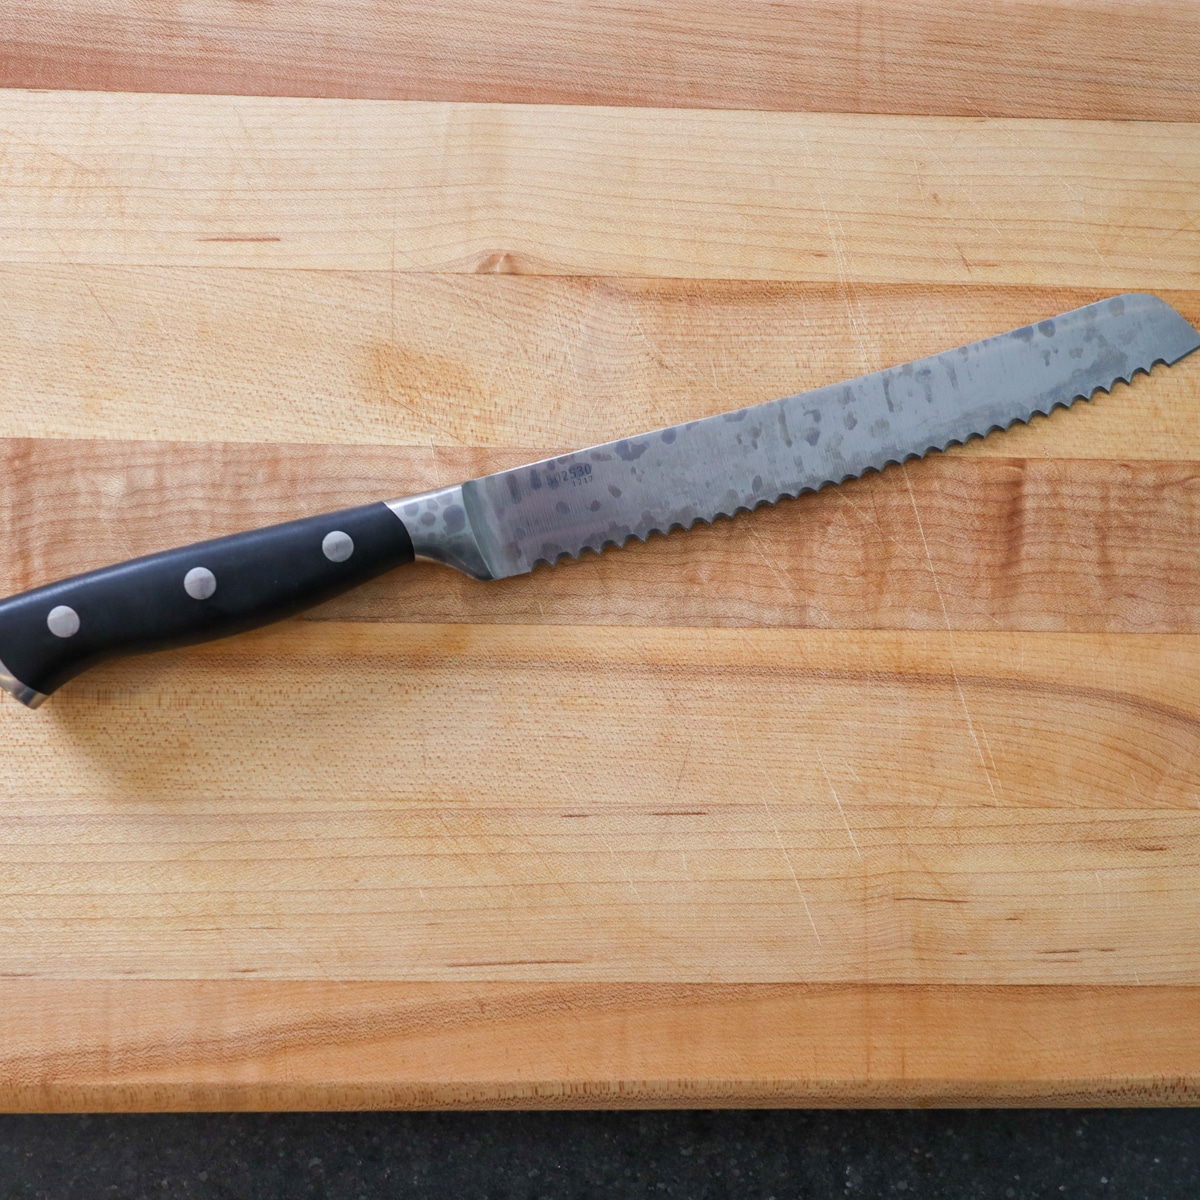 Serrated knife on a cutting board
